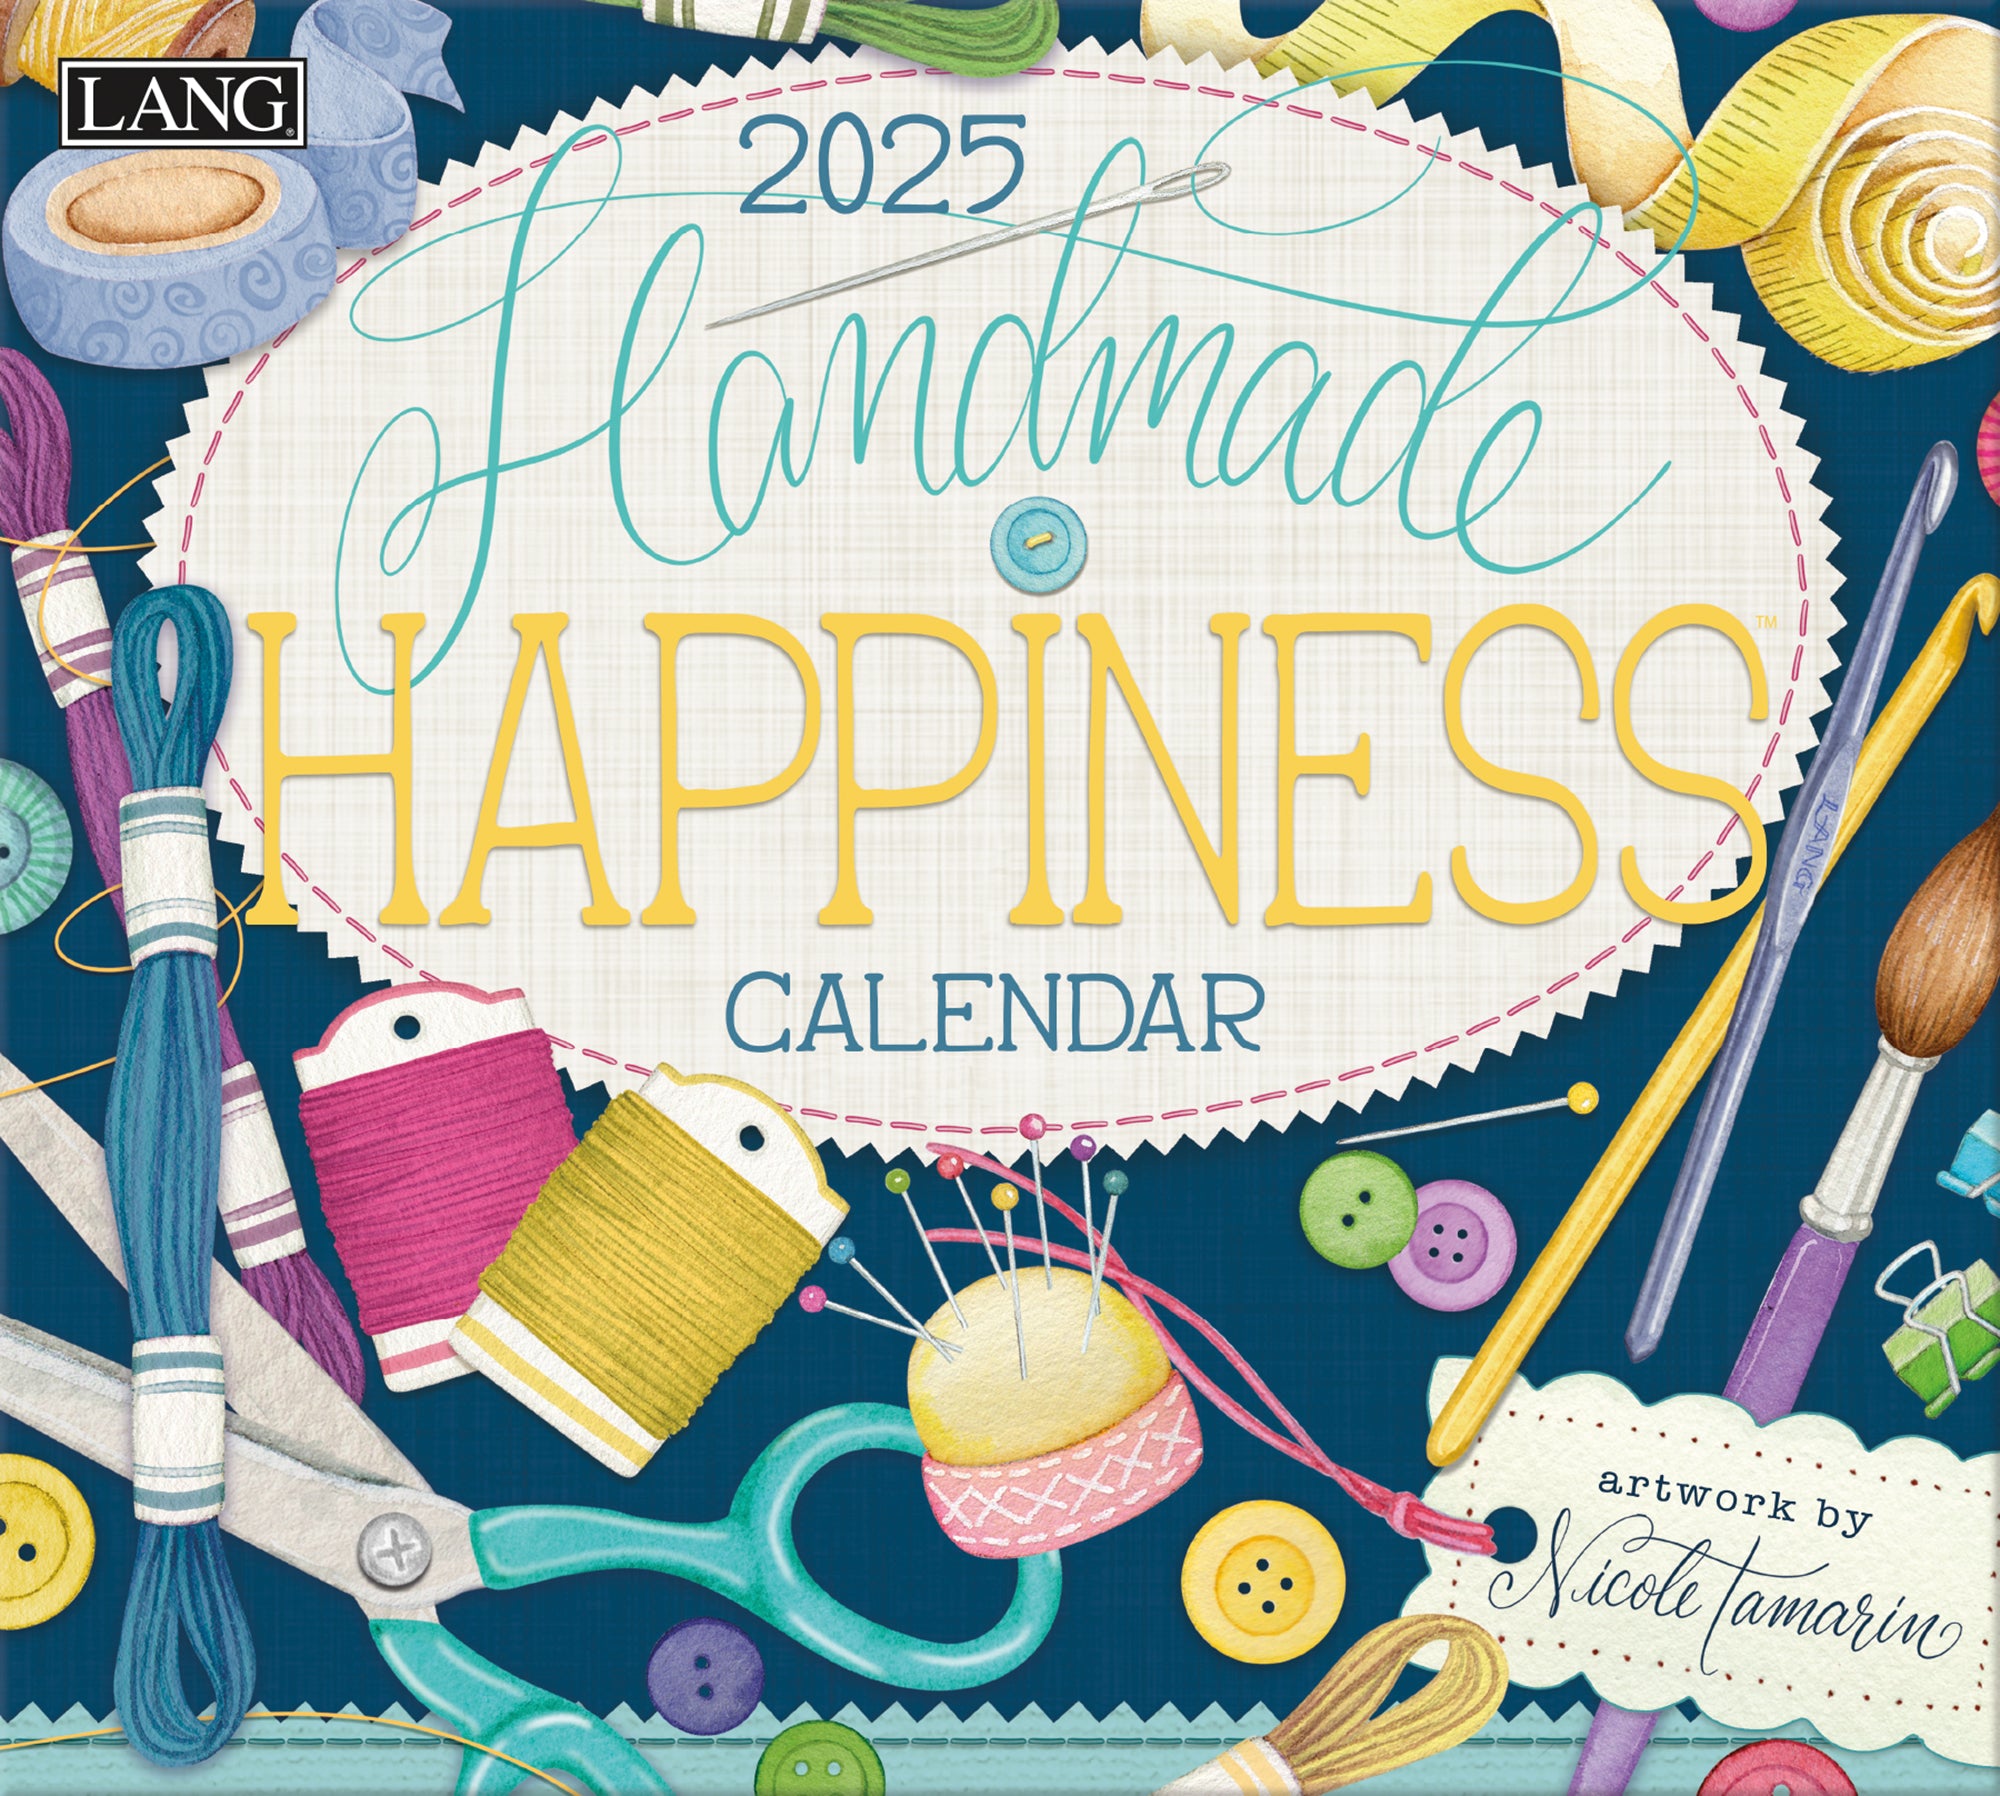 2025 LANG Handmade Happiness By Nicole Tamarin - Deluxe Wall Calendar